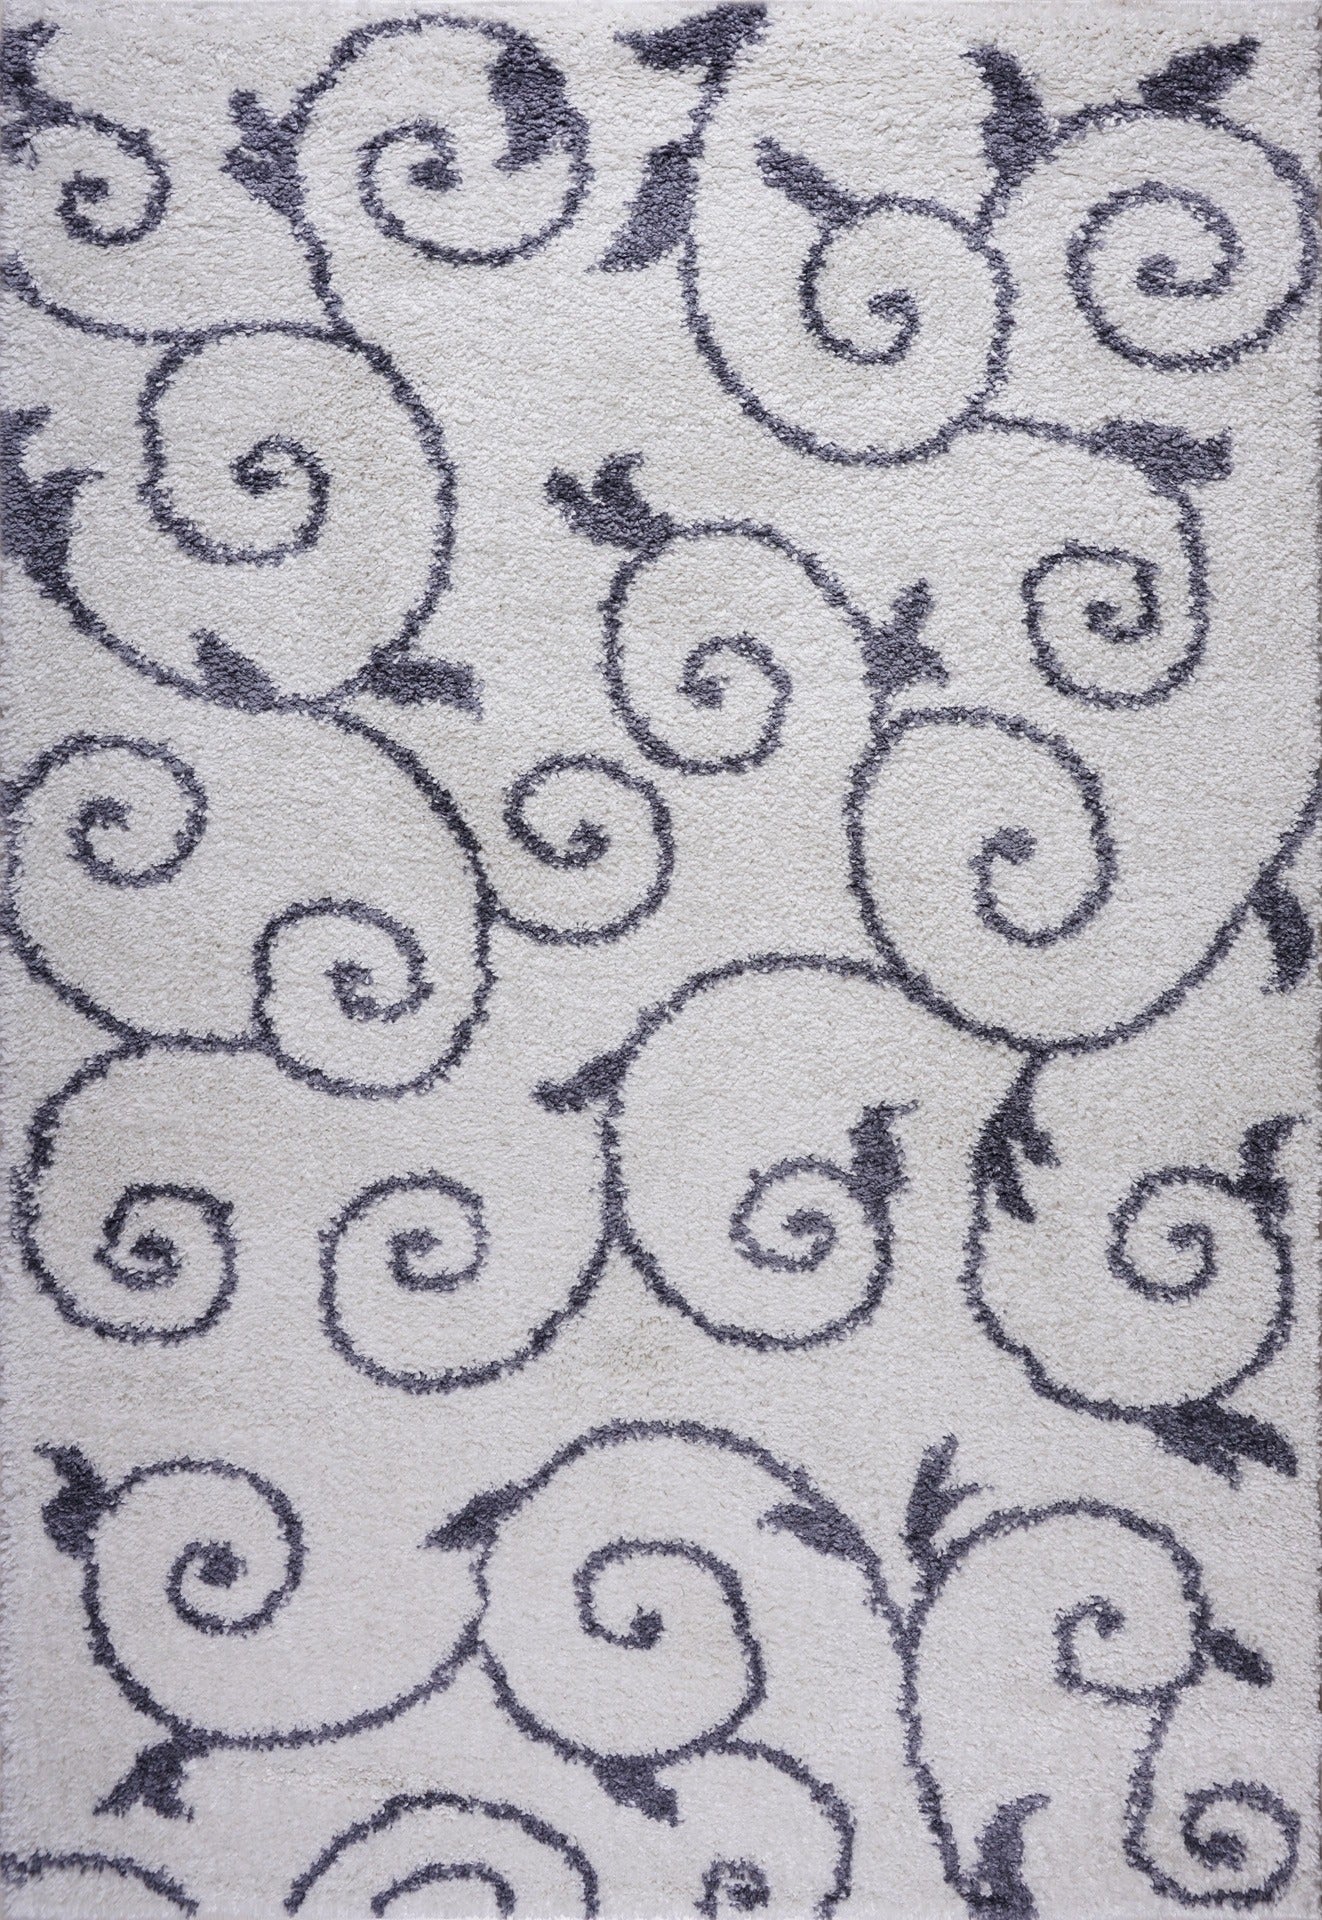 ladole rugs shaggy rabat abstract pattern sustainable spirals style indoor small mat doormat rug in white dark gray 110 x 211 57cm x 90cm 2x3 Doormat, Entrance, Balcony, Bathroom, Washroom